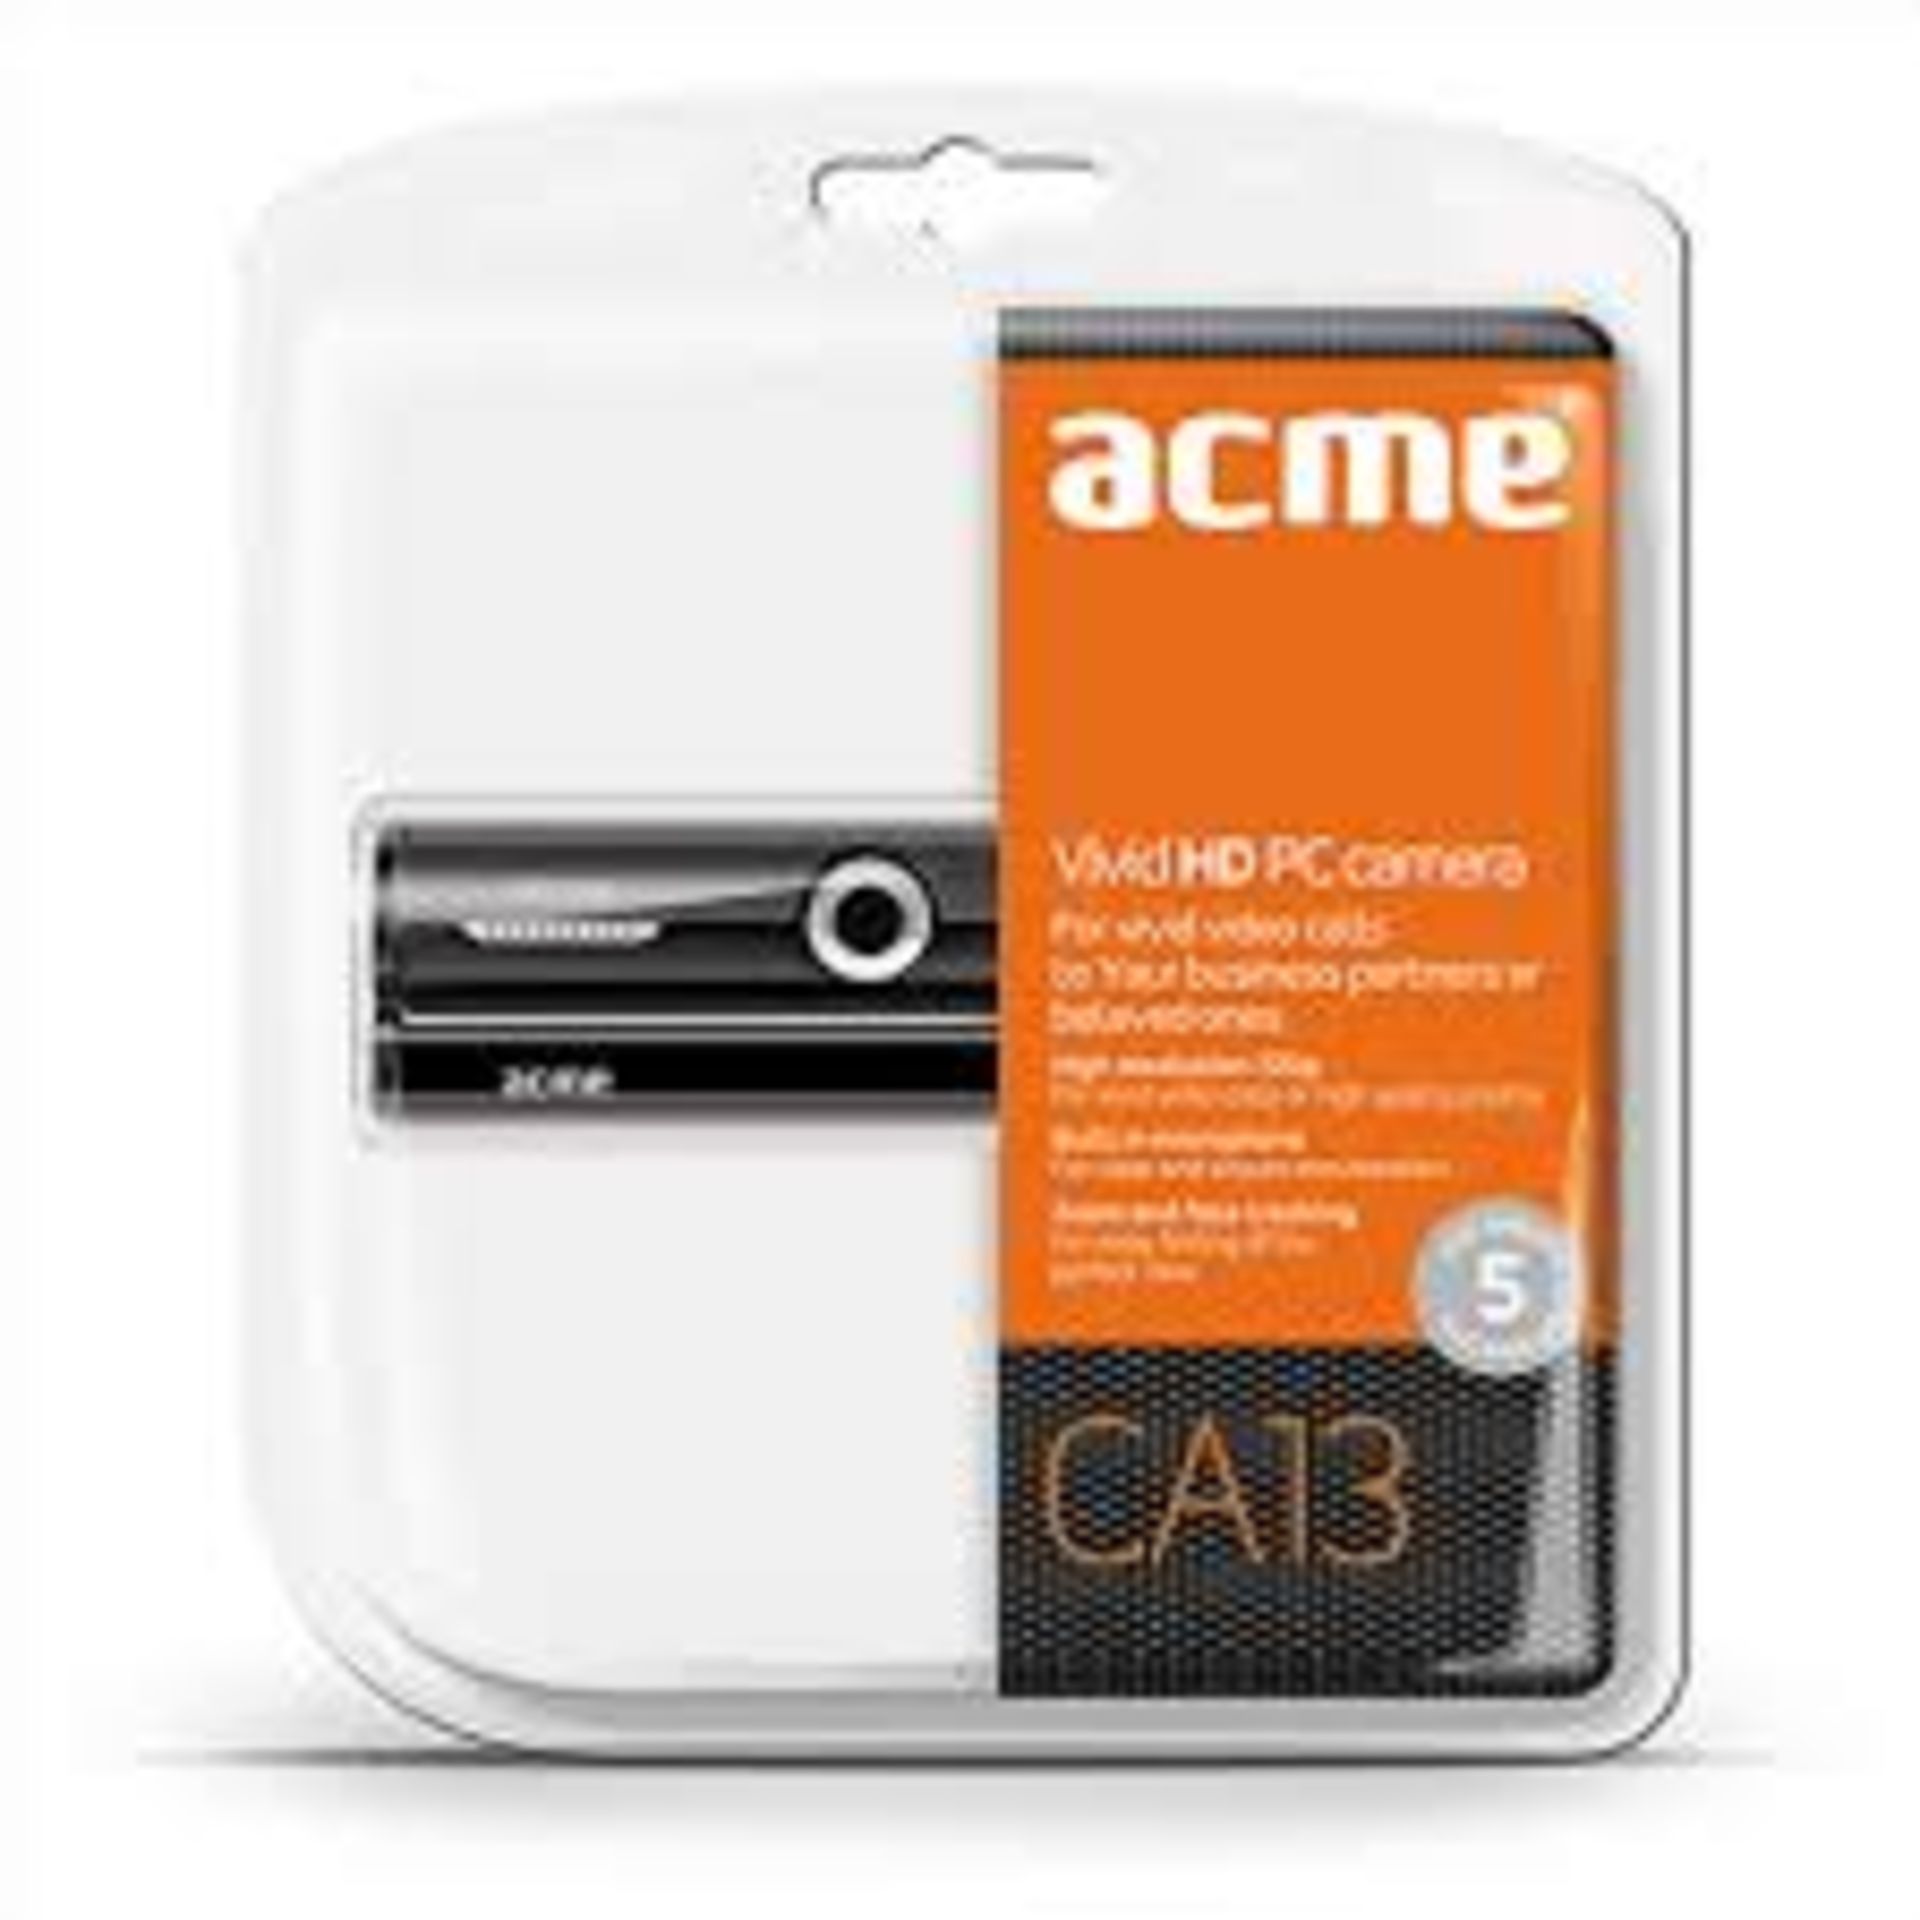 V Brand New ACME Vivid HD PC Webcam - USB 2.0 - 15fps - includes Drivers CD